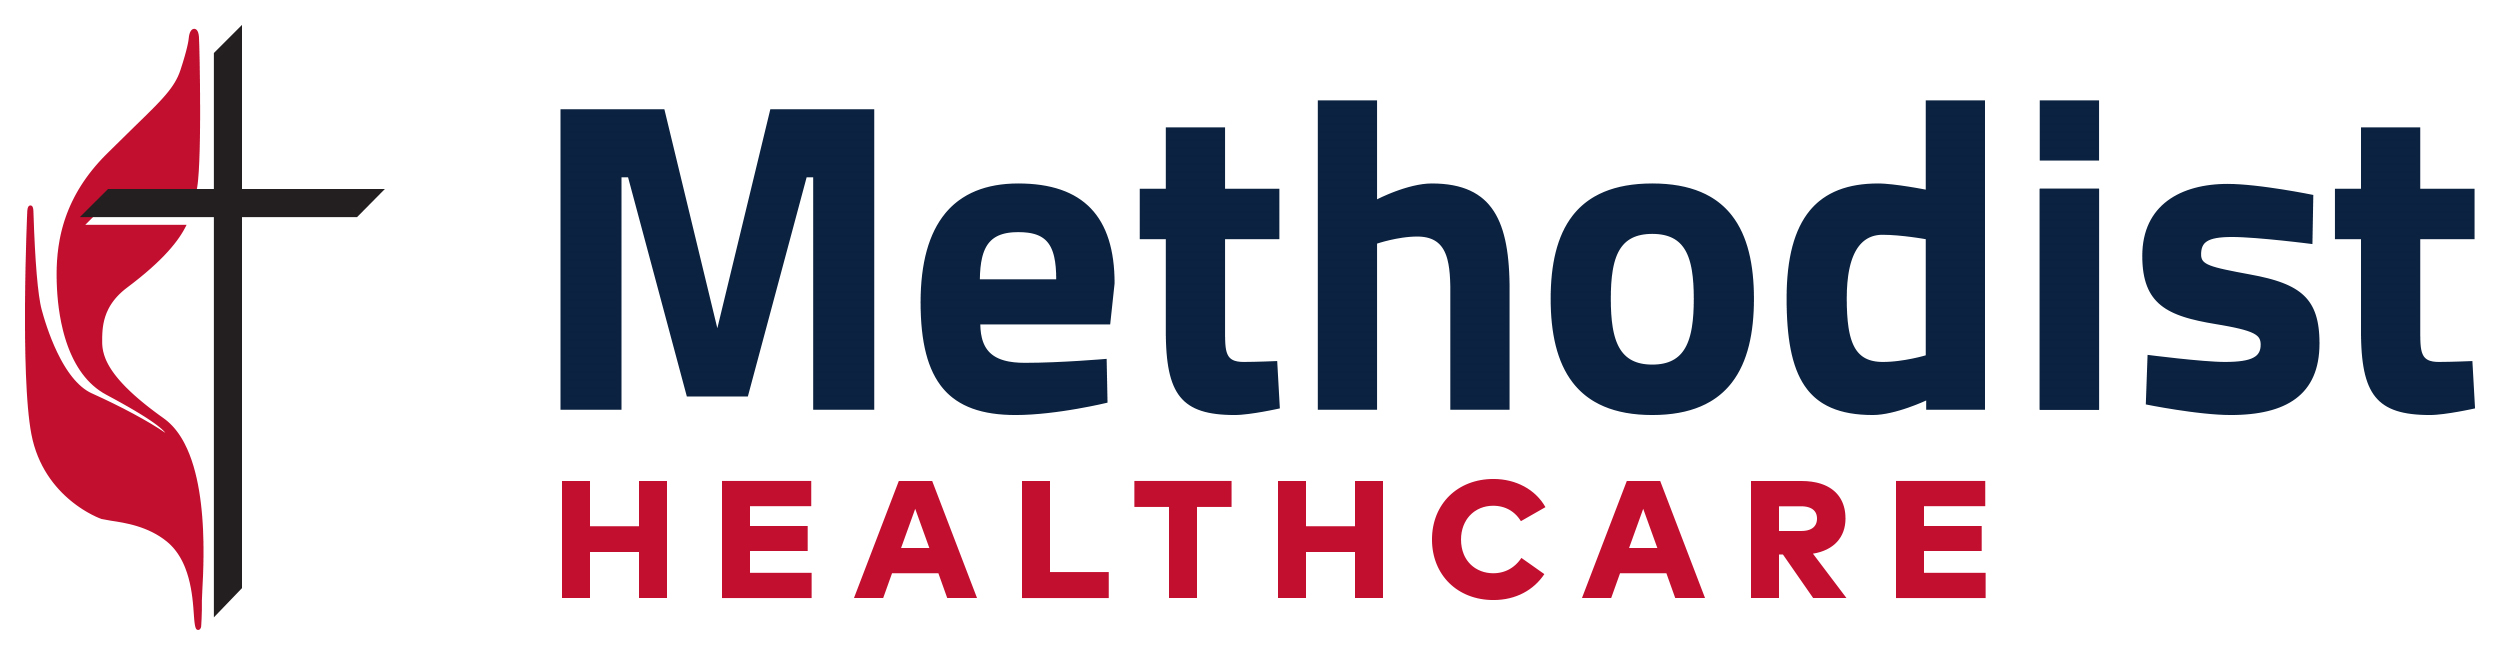 Methodist Healthcare Company Logo